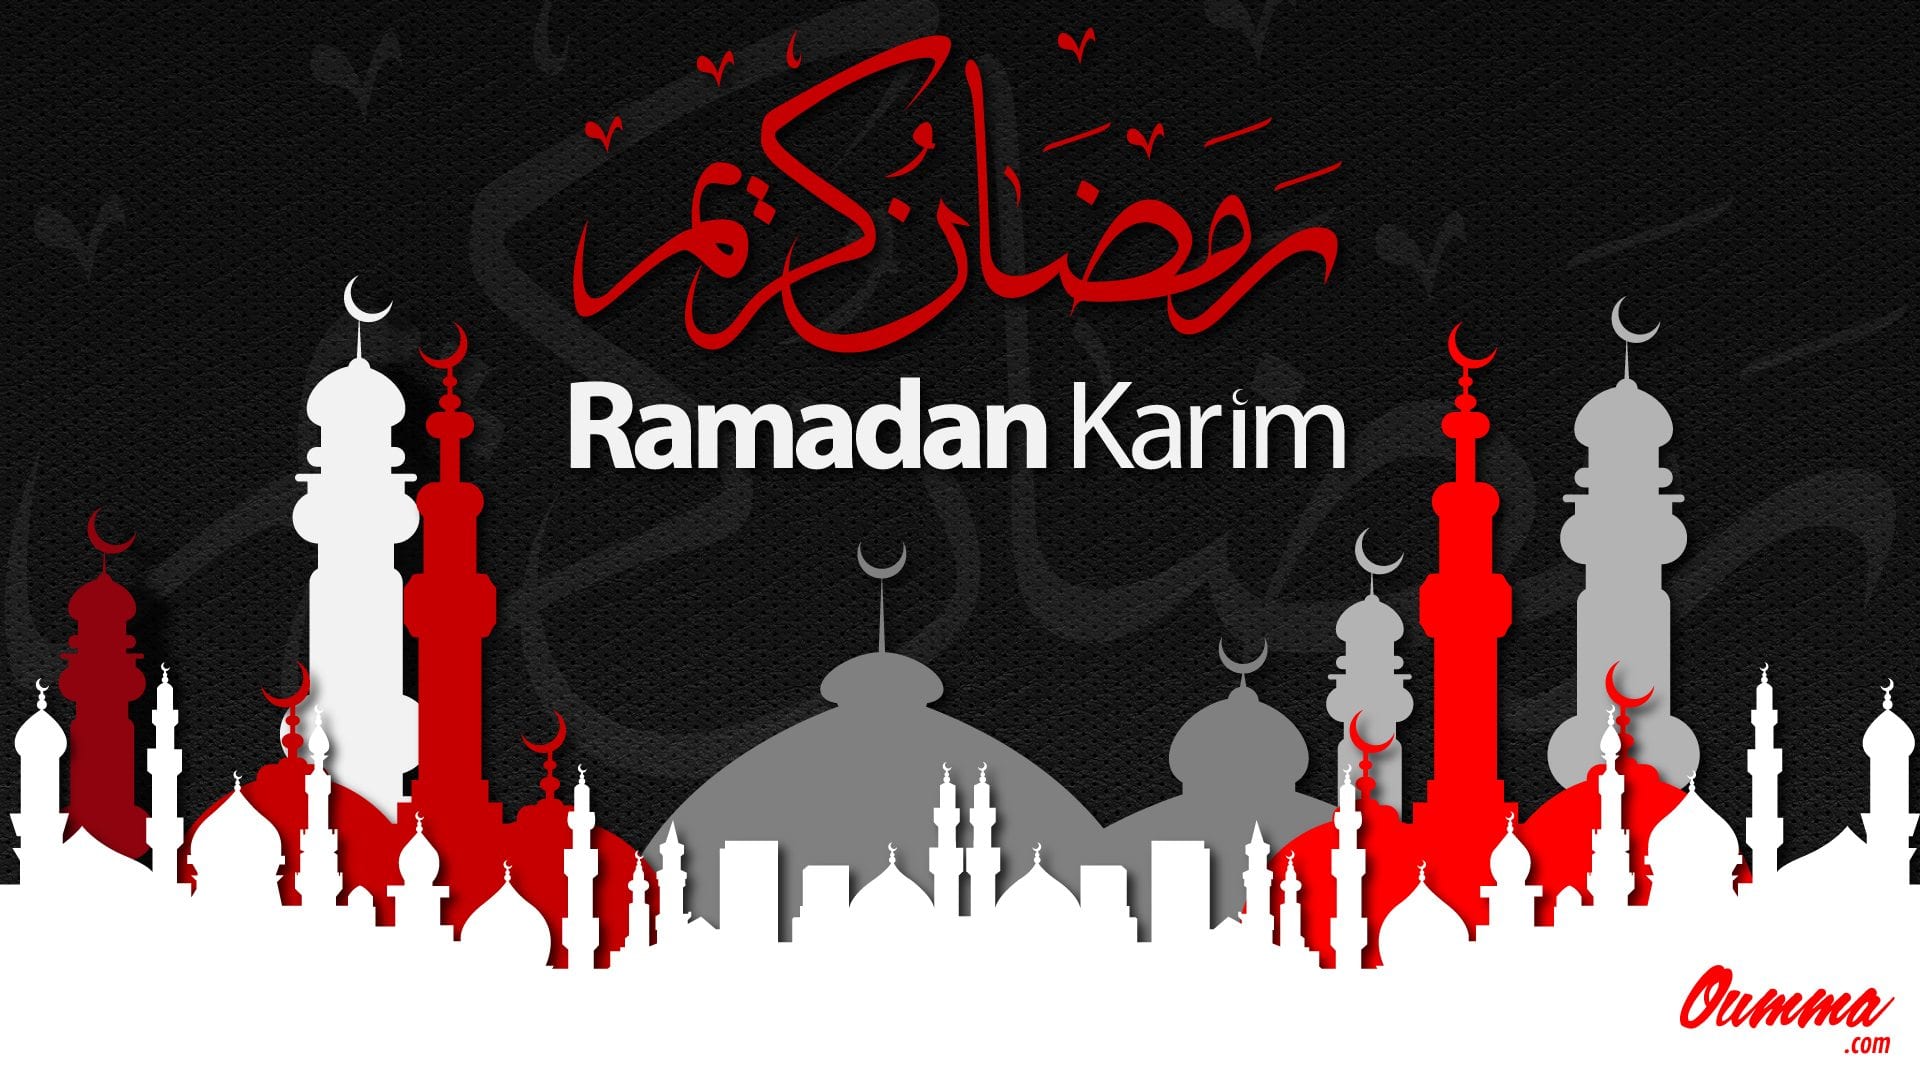 Шахру рамадан сура. Рамадан. Ramadan Kareem. В честь праздника Рамадан скидка.